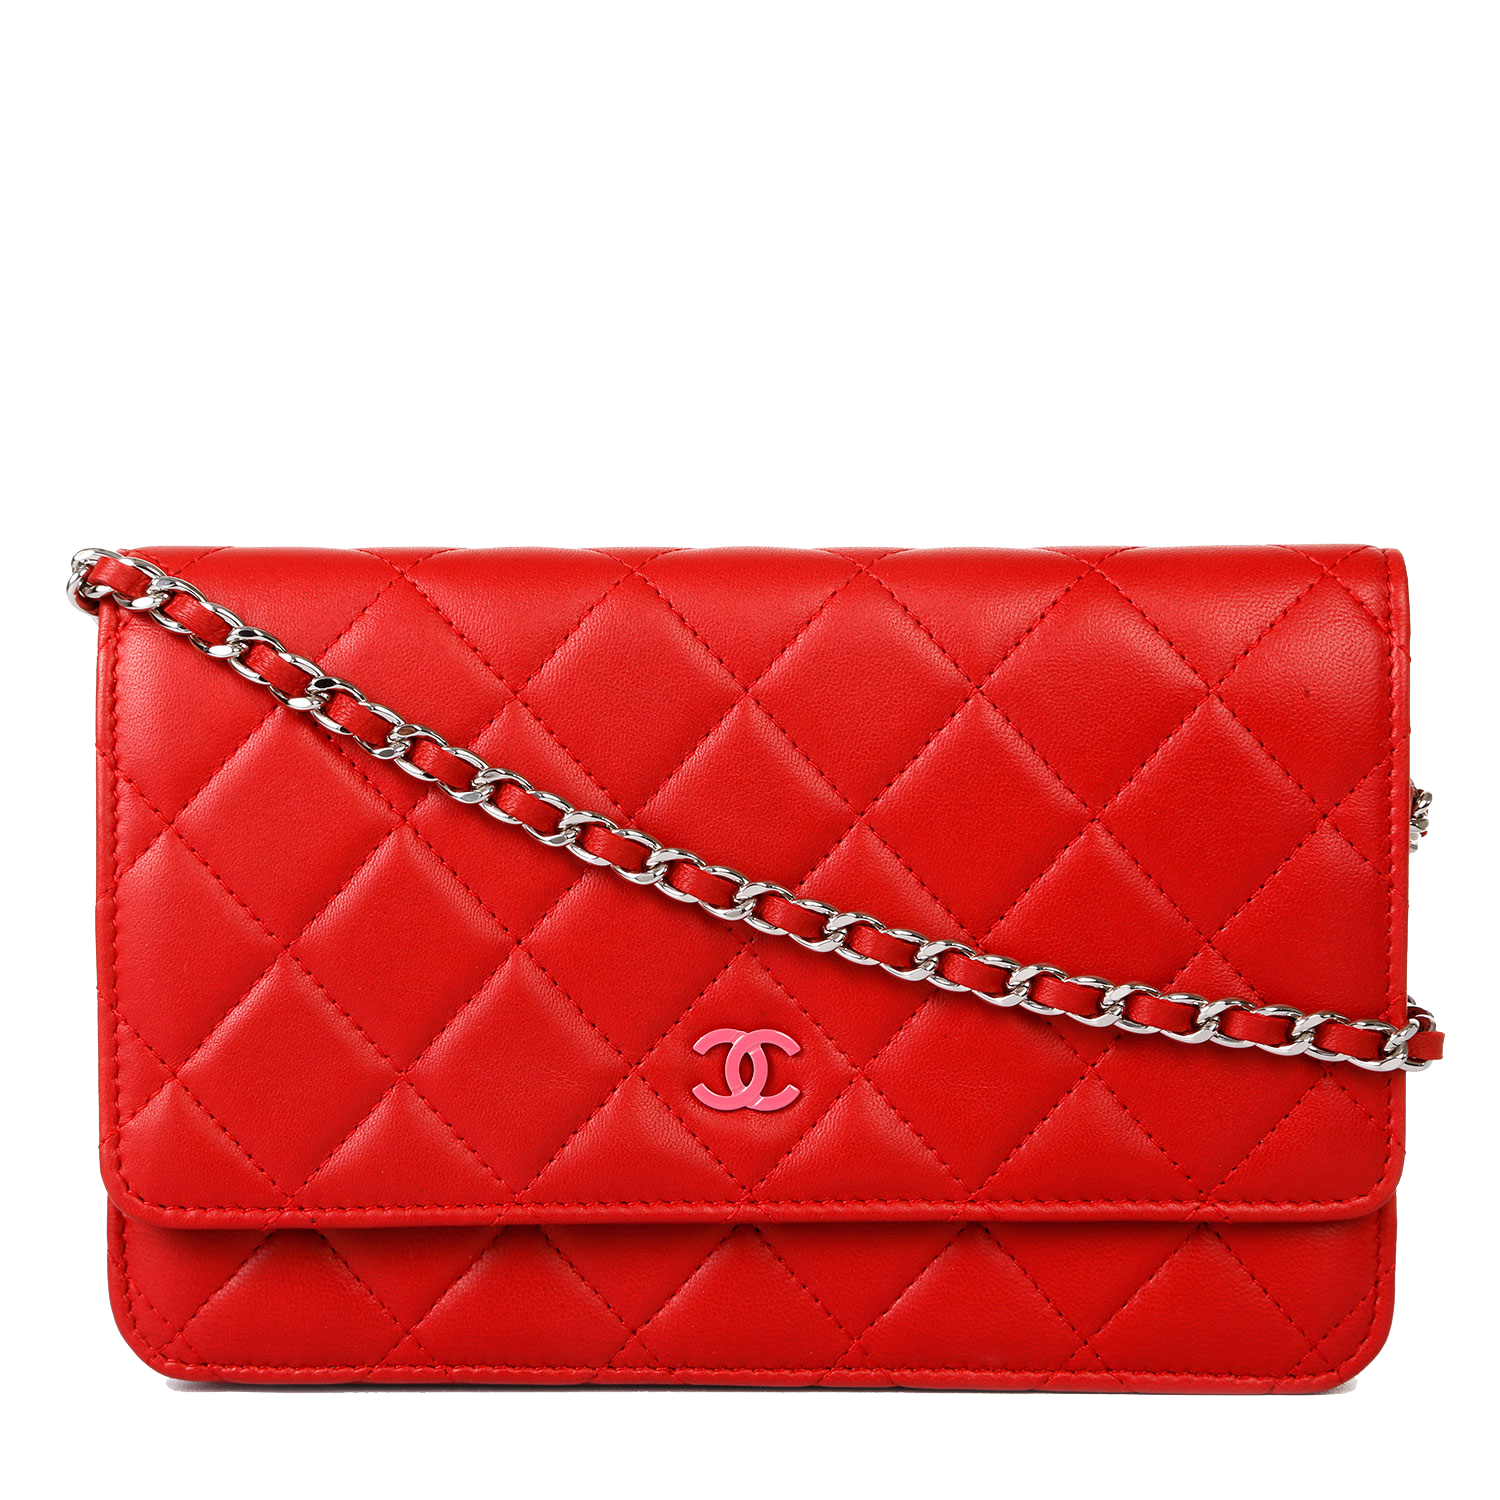 Fashion Adidas Bag Bowling Handbag Chanel  Chanel Trendy Cc Light Green  Transparent PNG  846x1080  Free Download on NicePNG